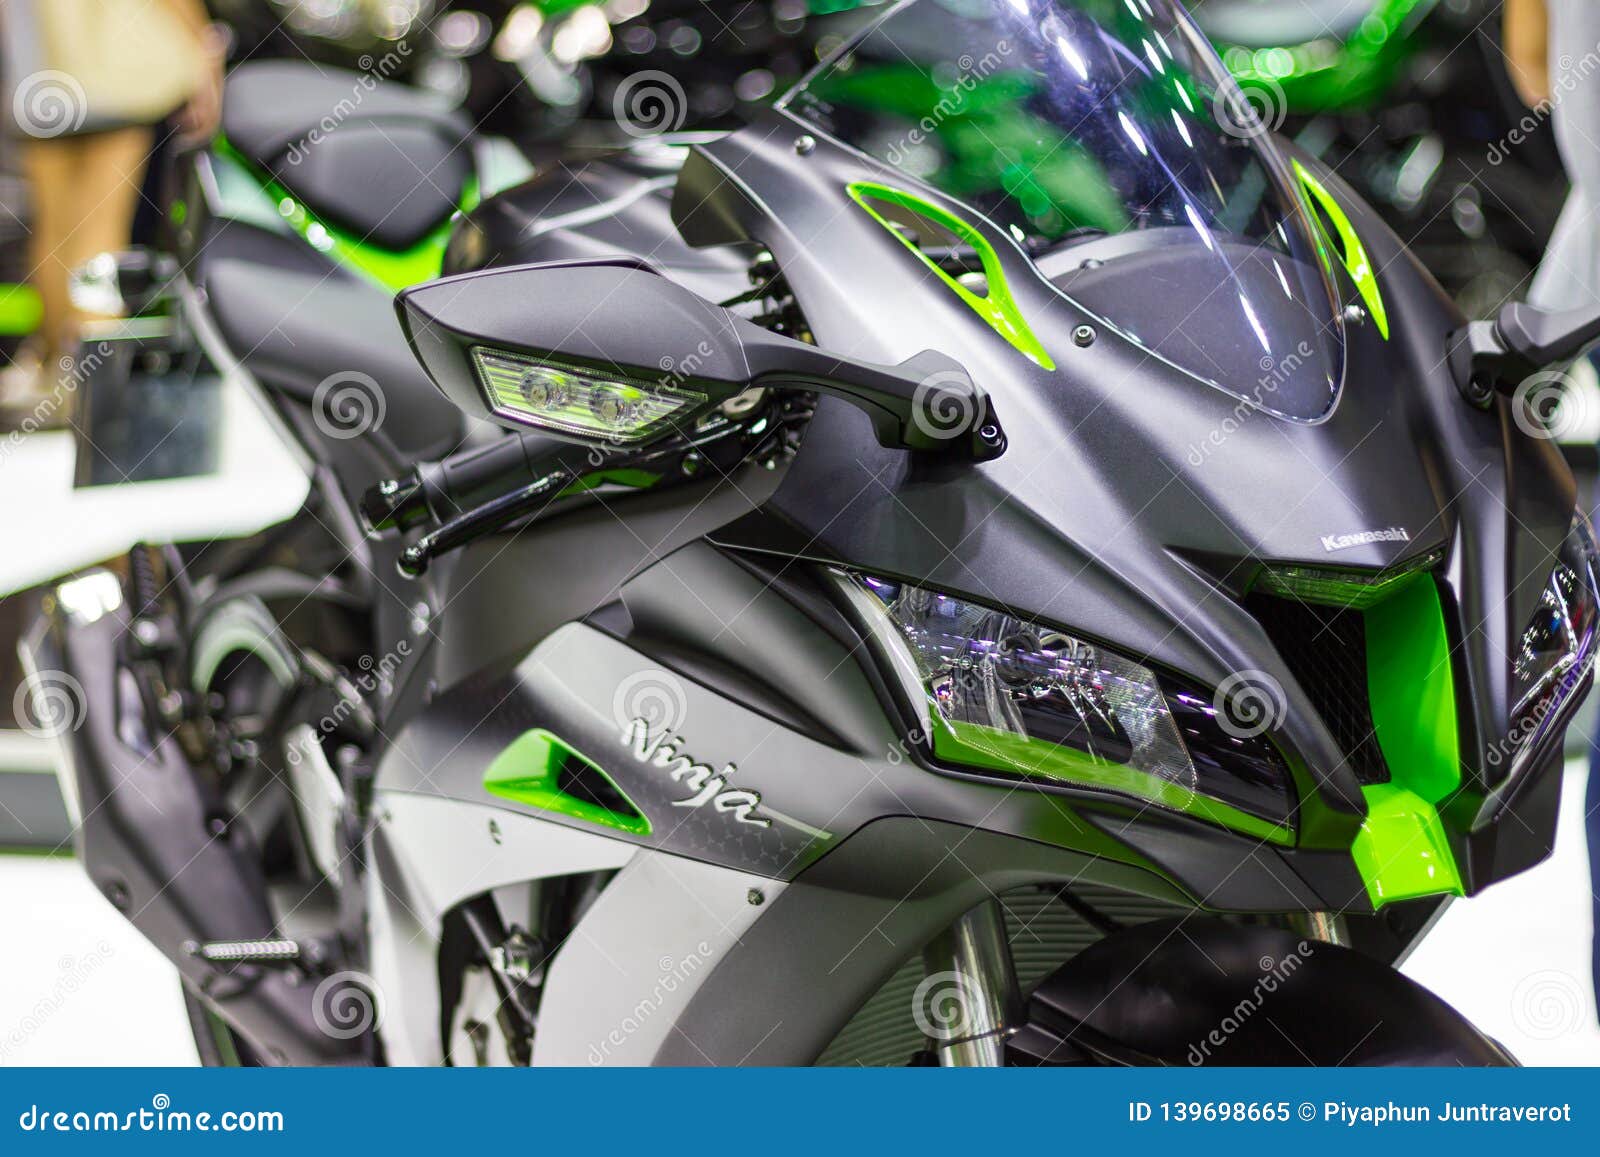 bringe handlingen alene kompleksitet Front of Motorcycle Kawasaki Ninja, News Modern New Design Technology  Editorial Image - Image of drive, detail: 139698665